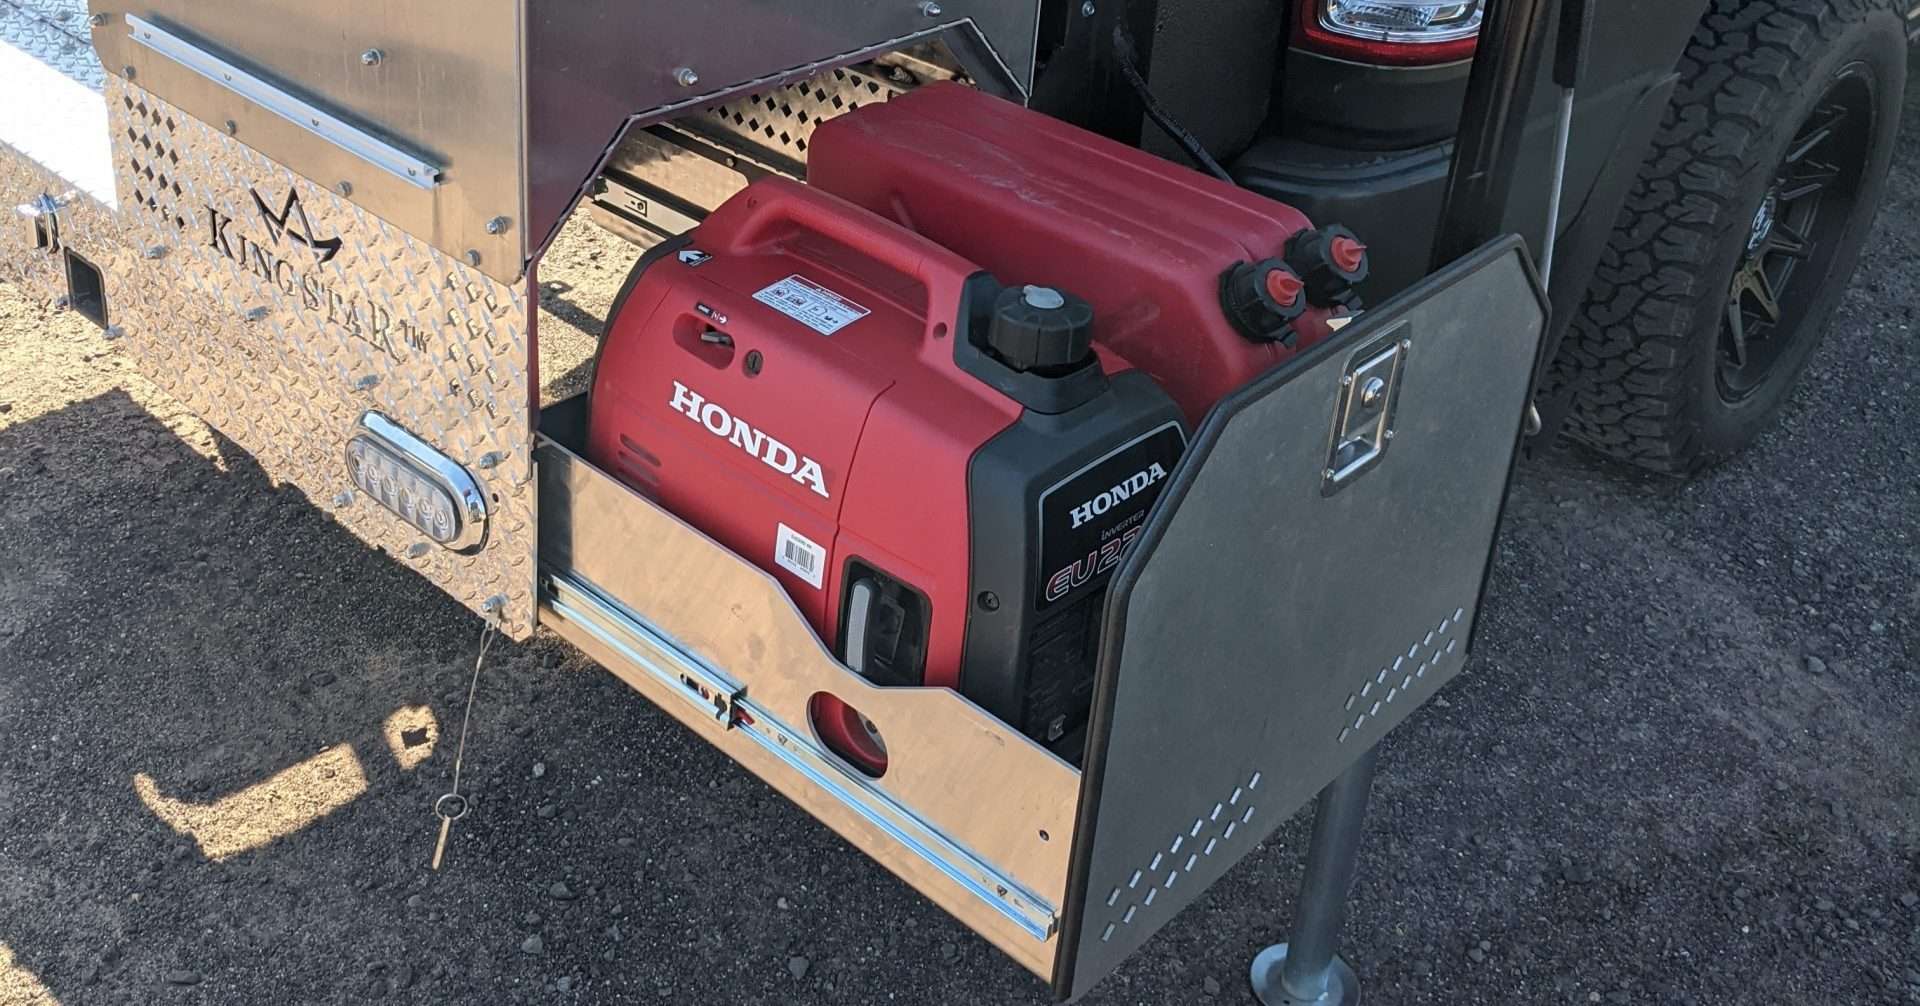 honda portable generator on slide